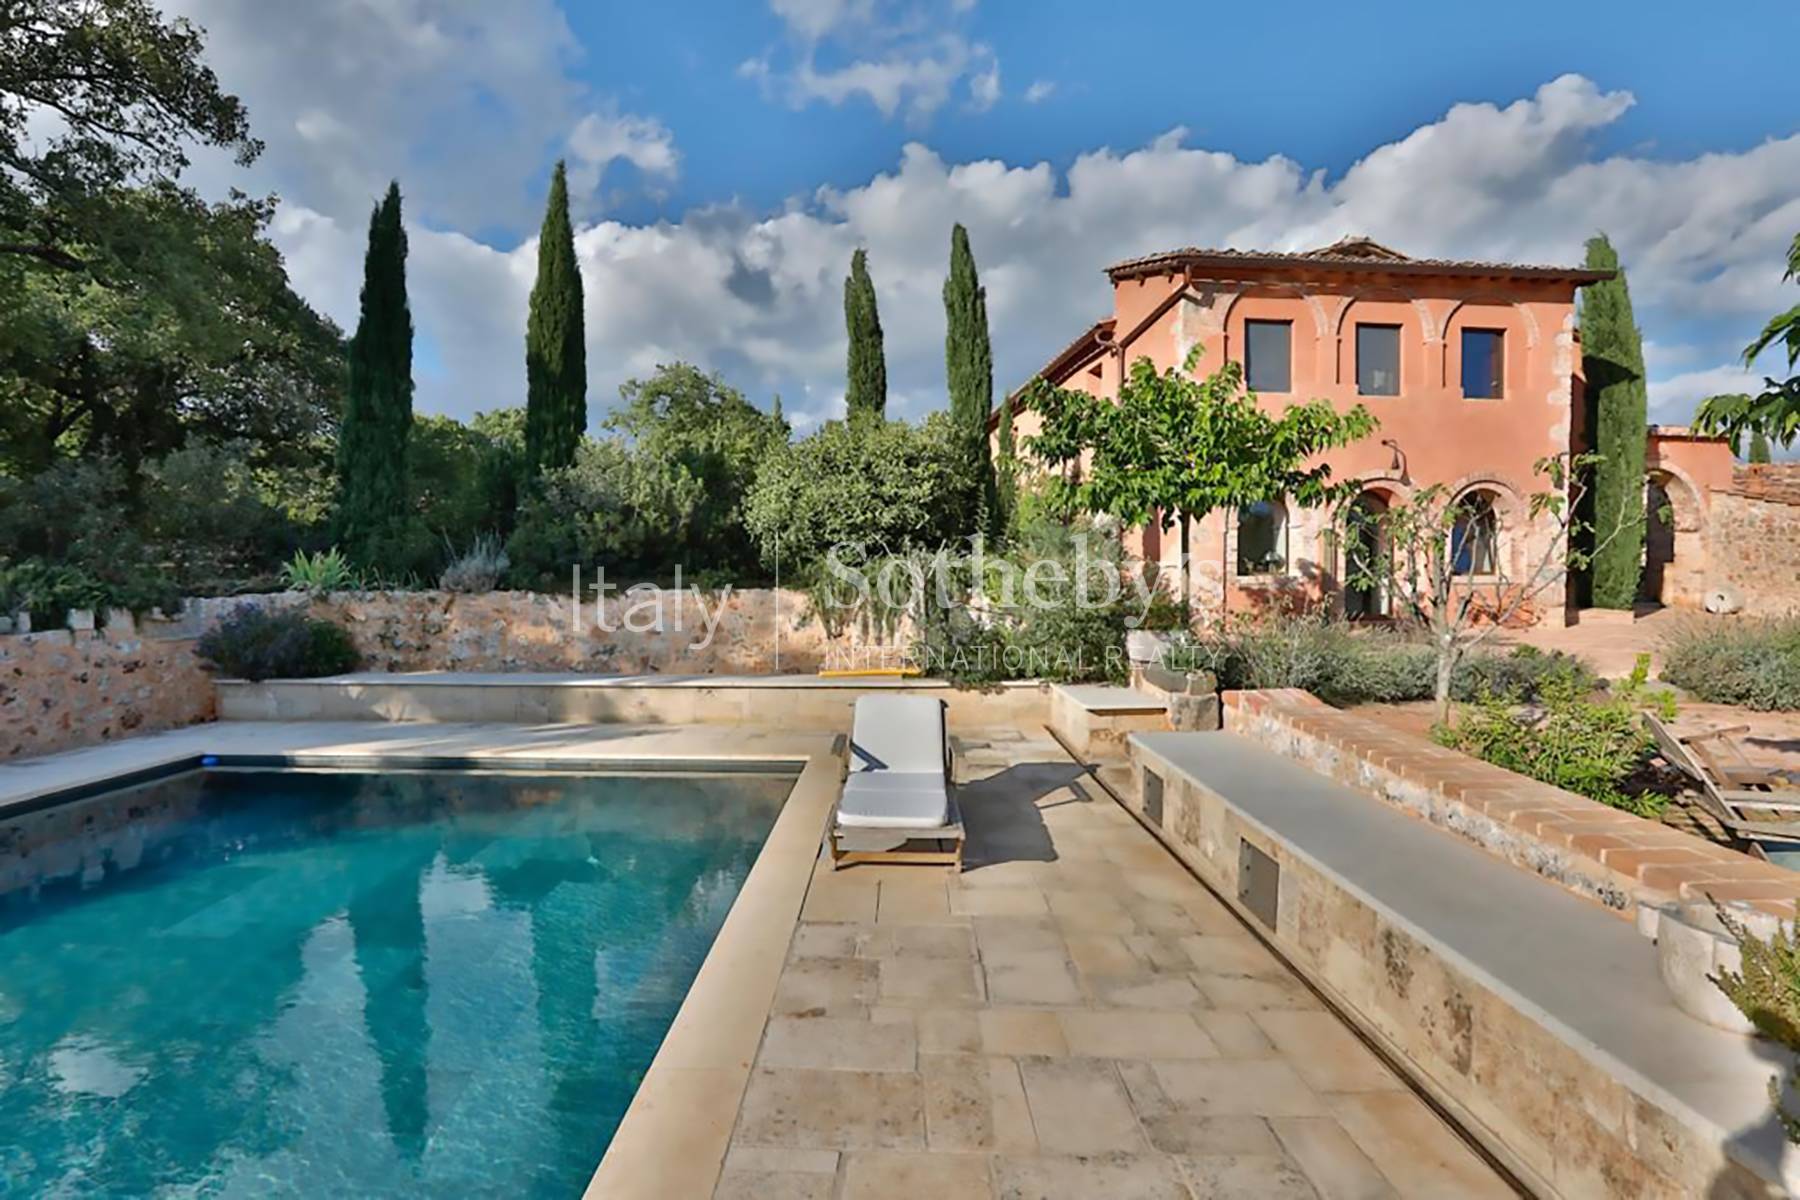 Luxurious 6 bedroom villa with pool near Siena - 2